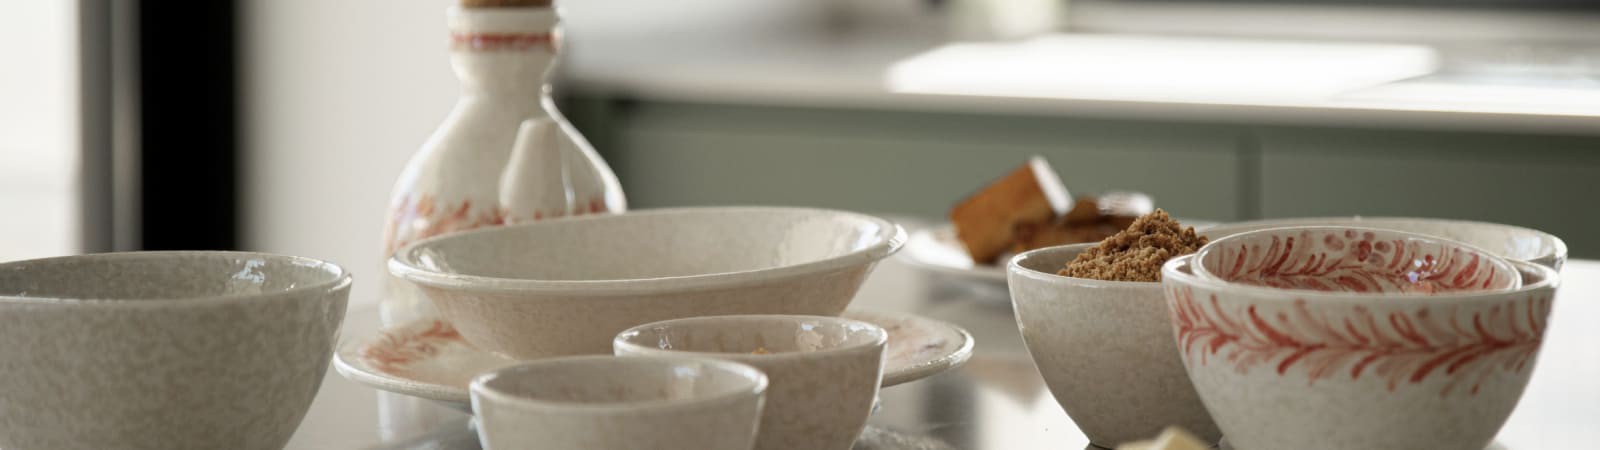 Craft Ceramic Dinnerware Online Sale